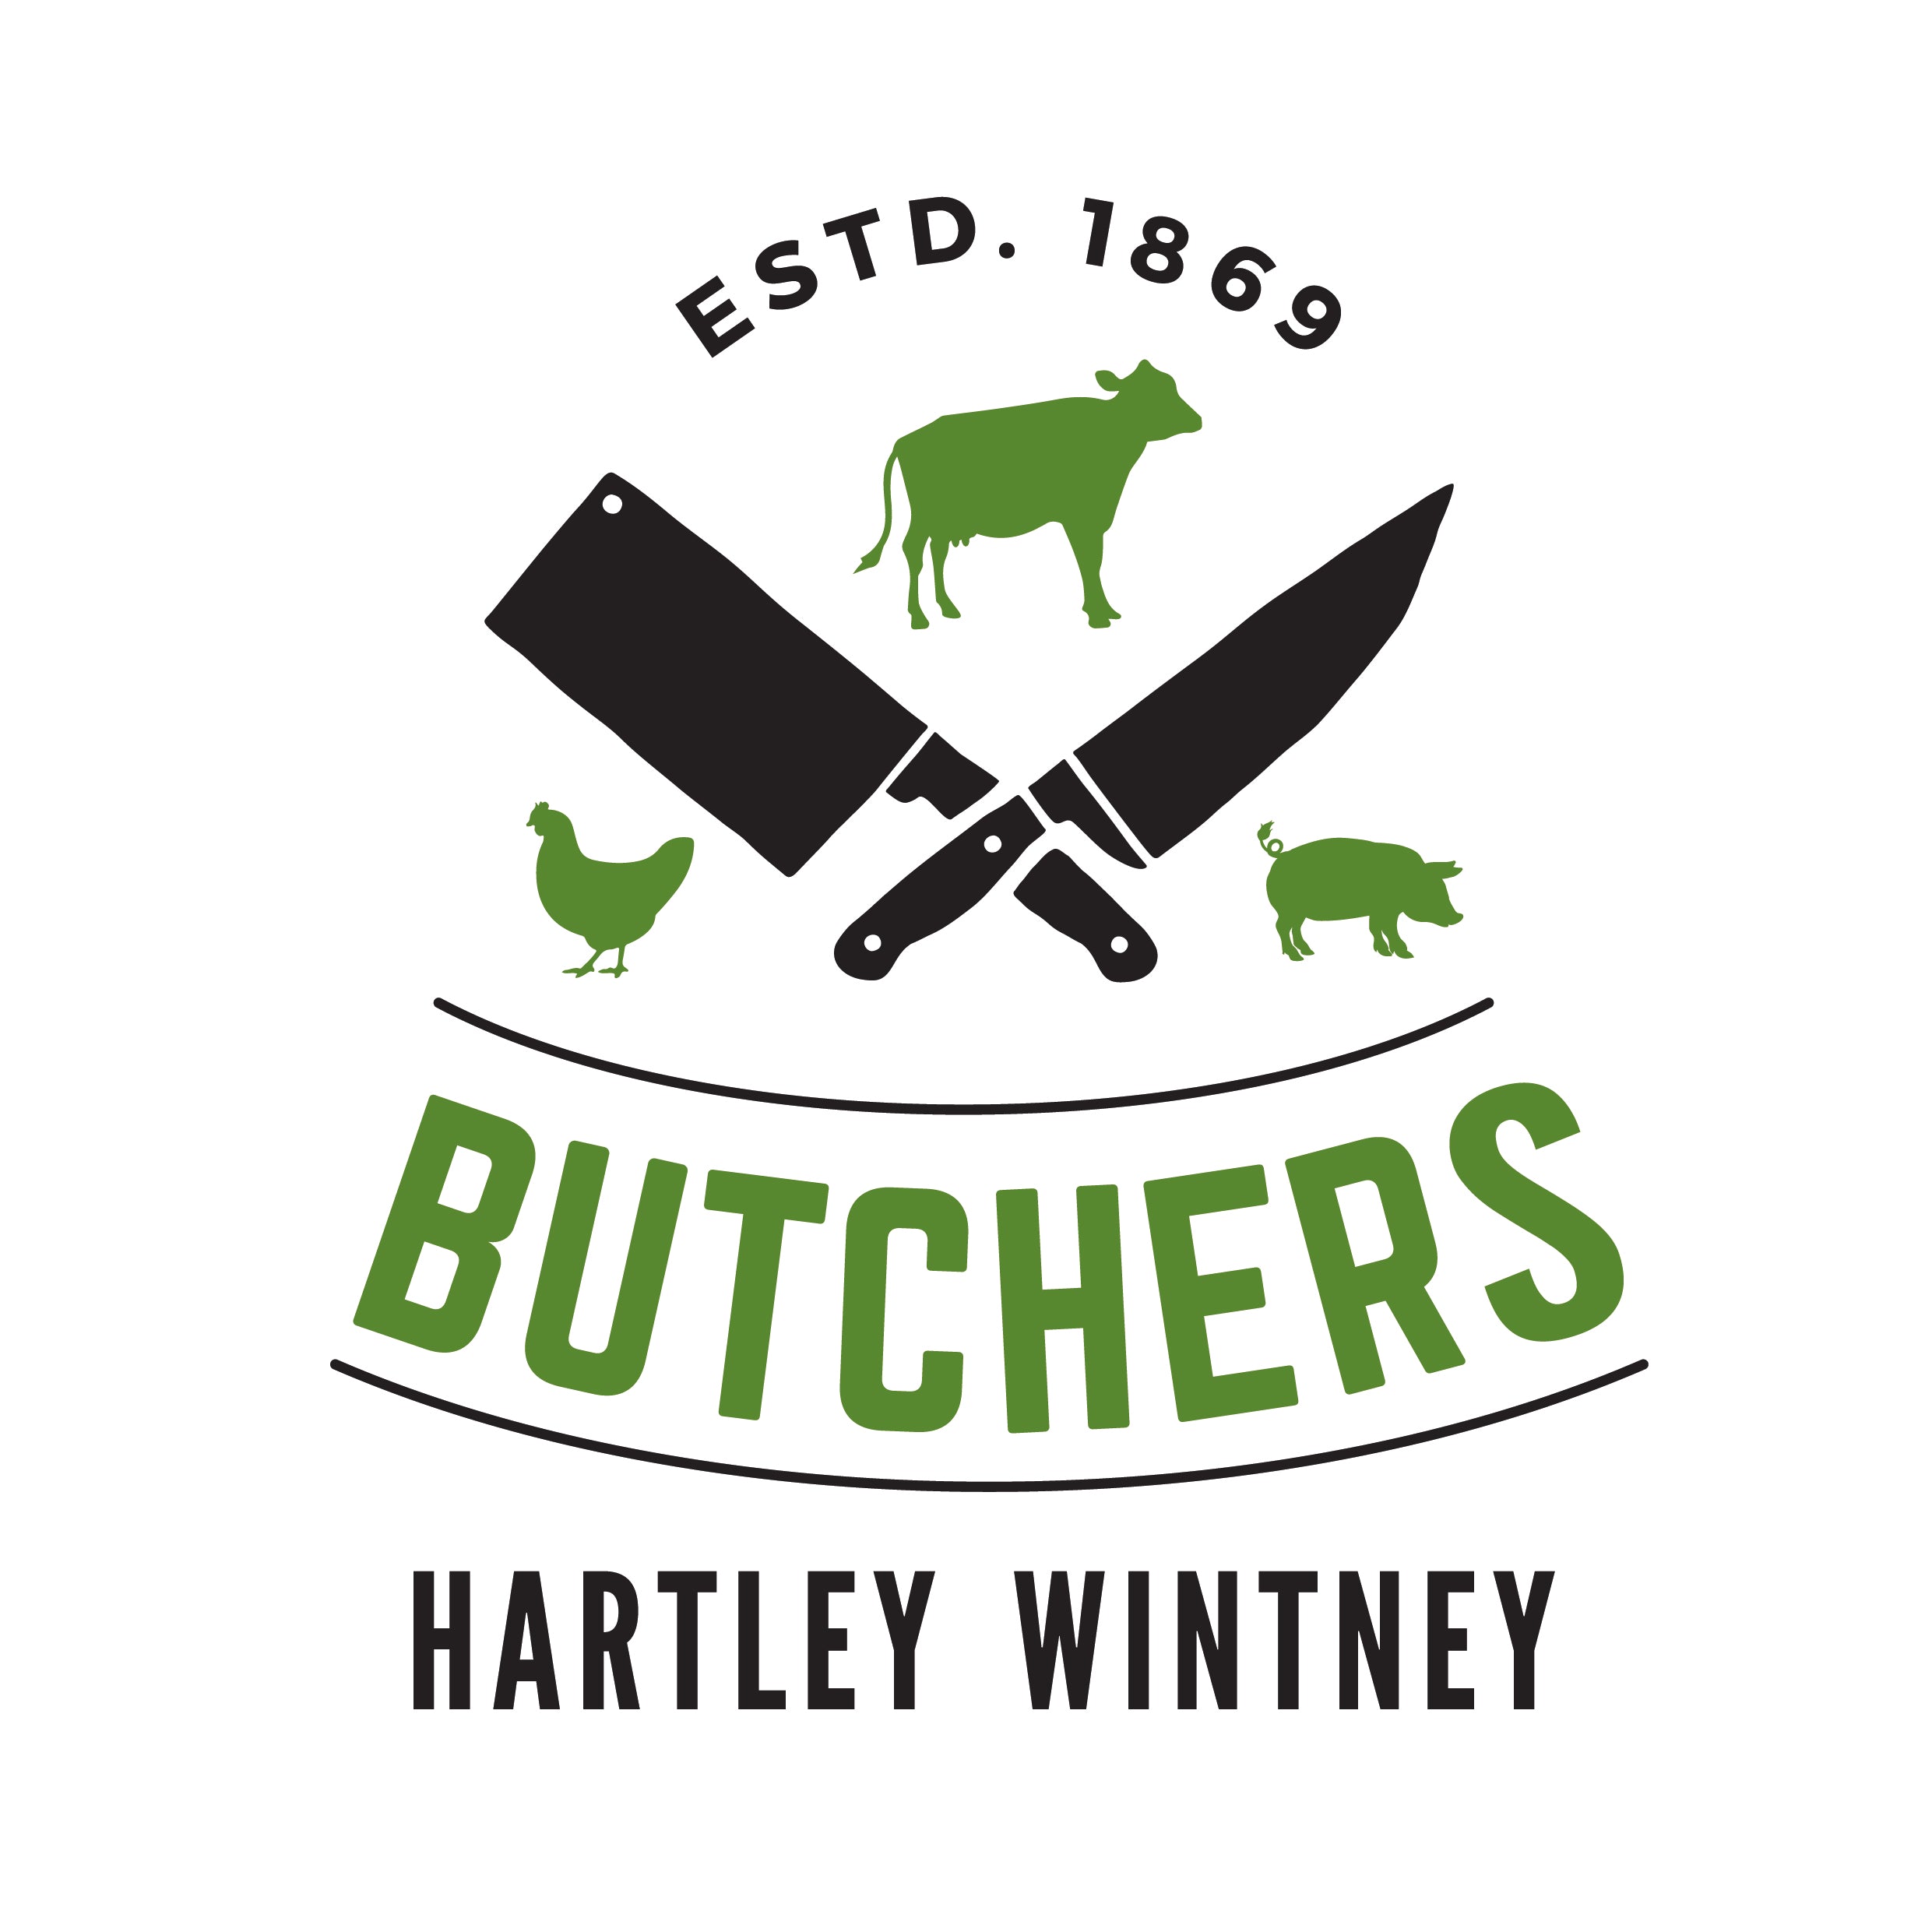 Hartley Wintney Butchers